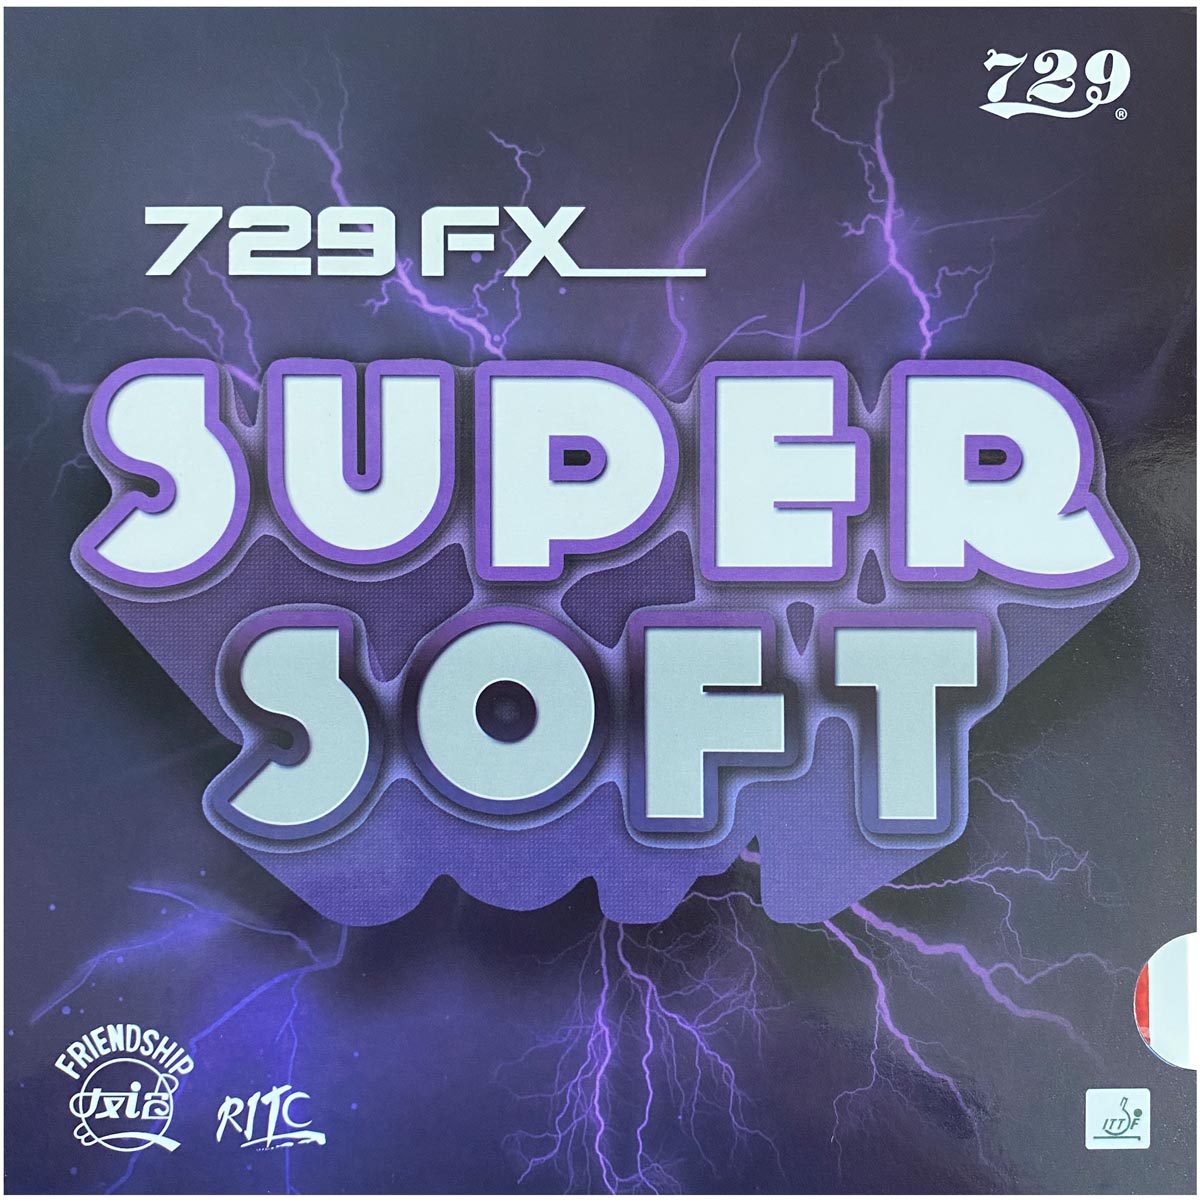 Friendship Belag 729 FX Super Soft